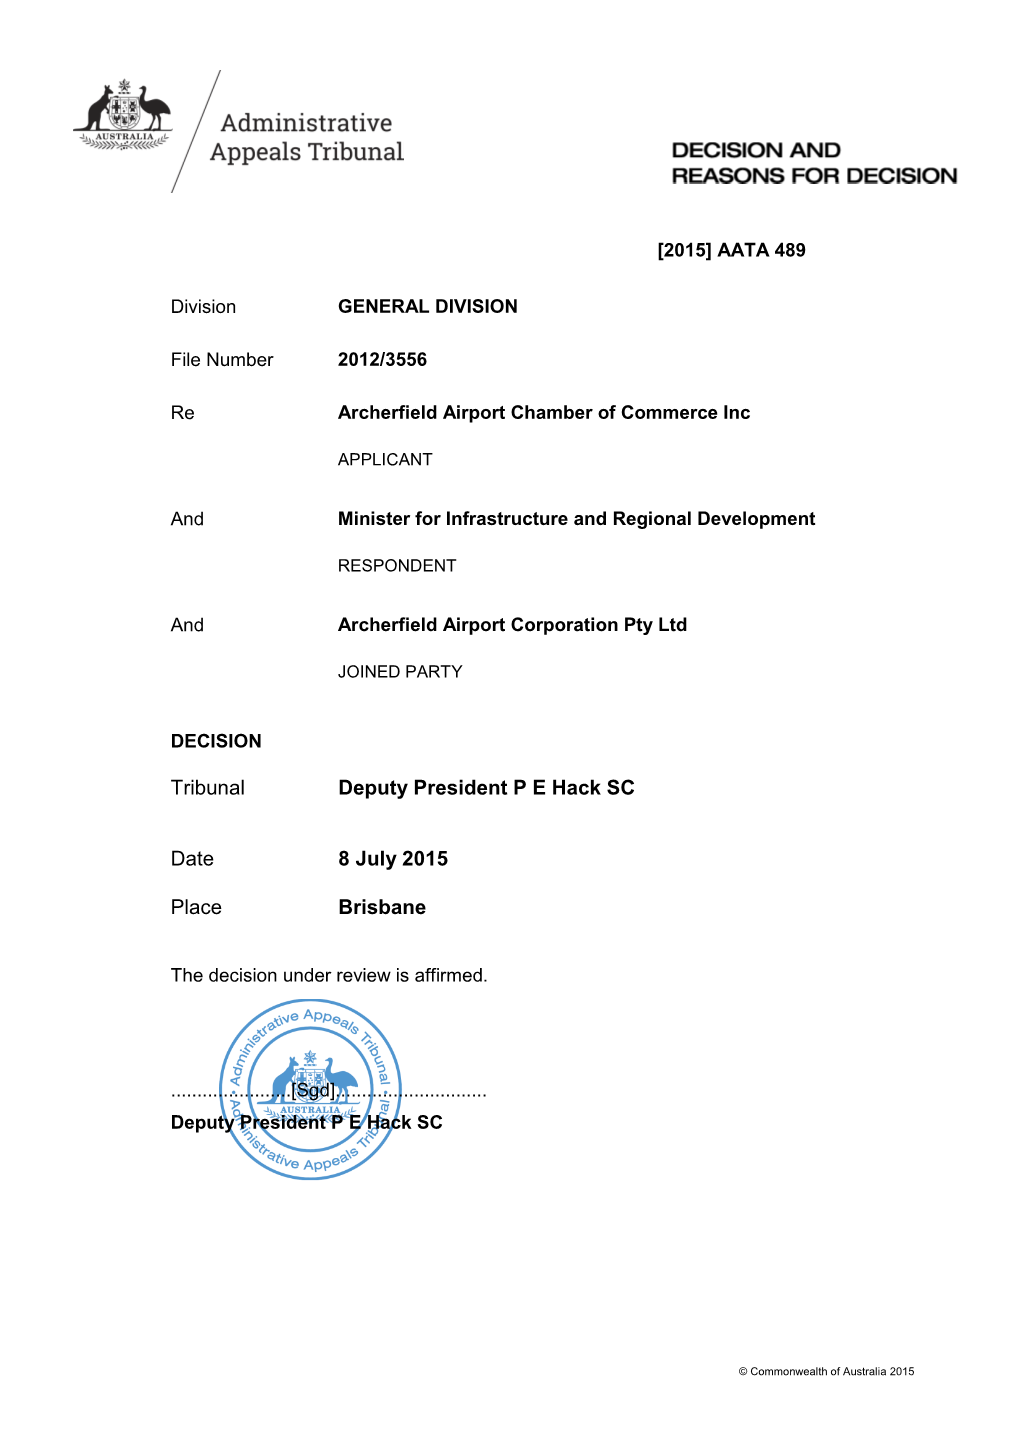 Tribunal Deputy President P E Hack SC Date 8 July 2015 Place Brisbane